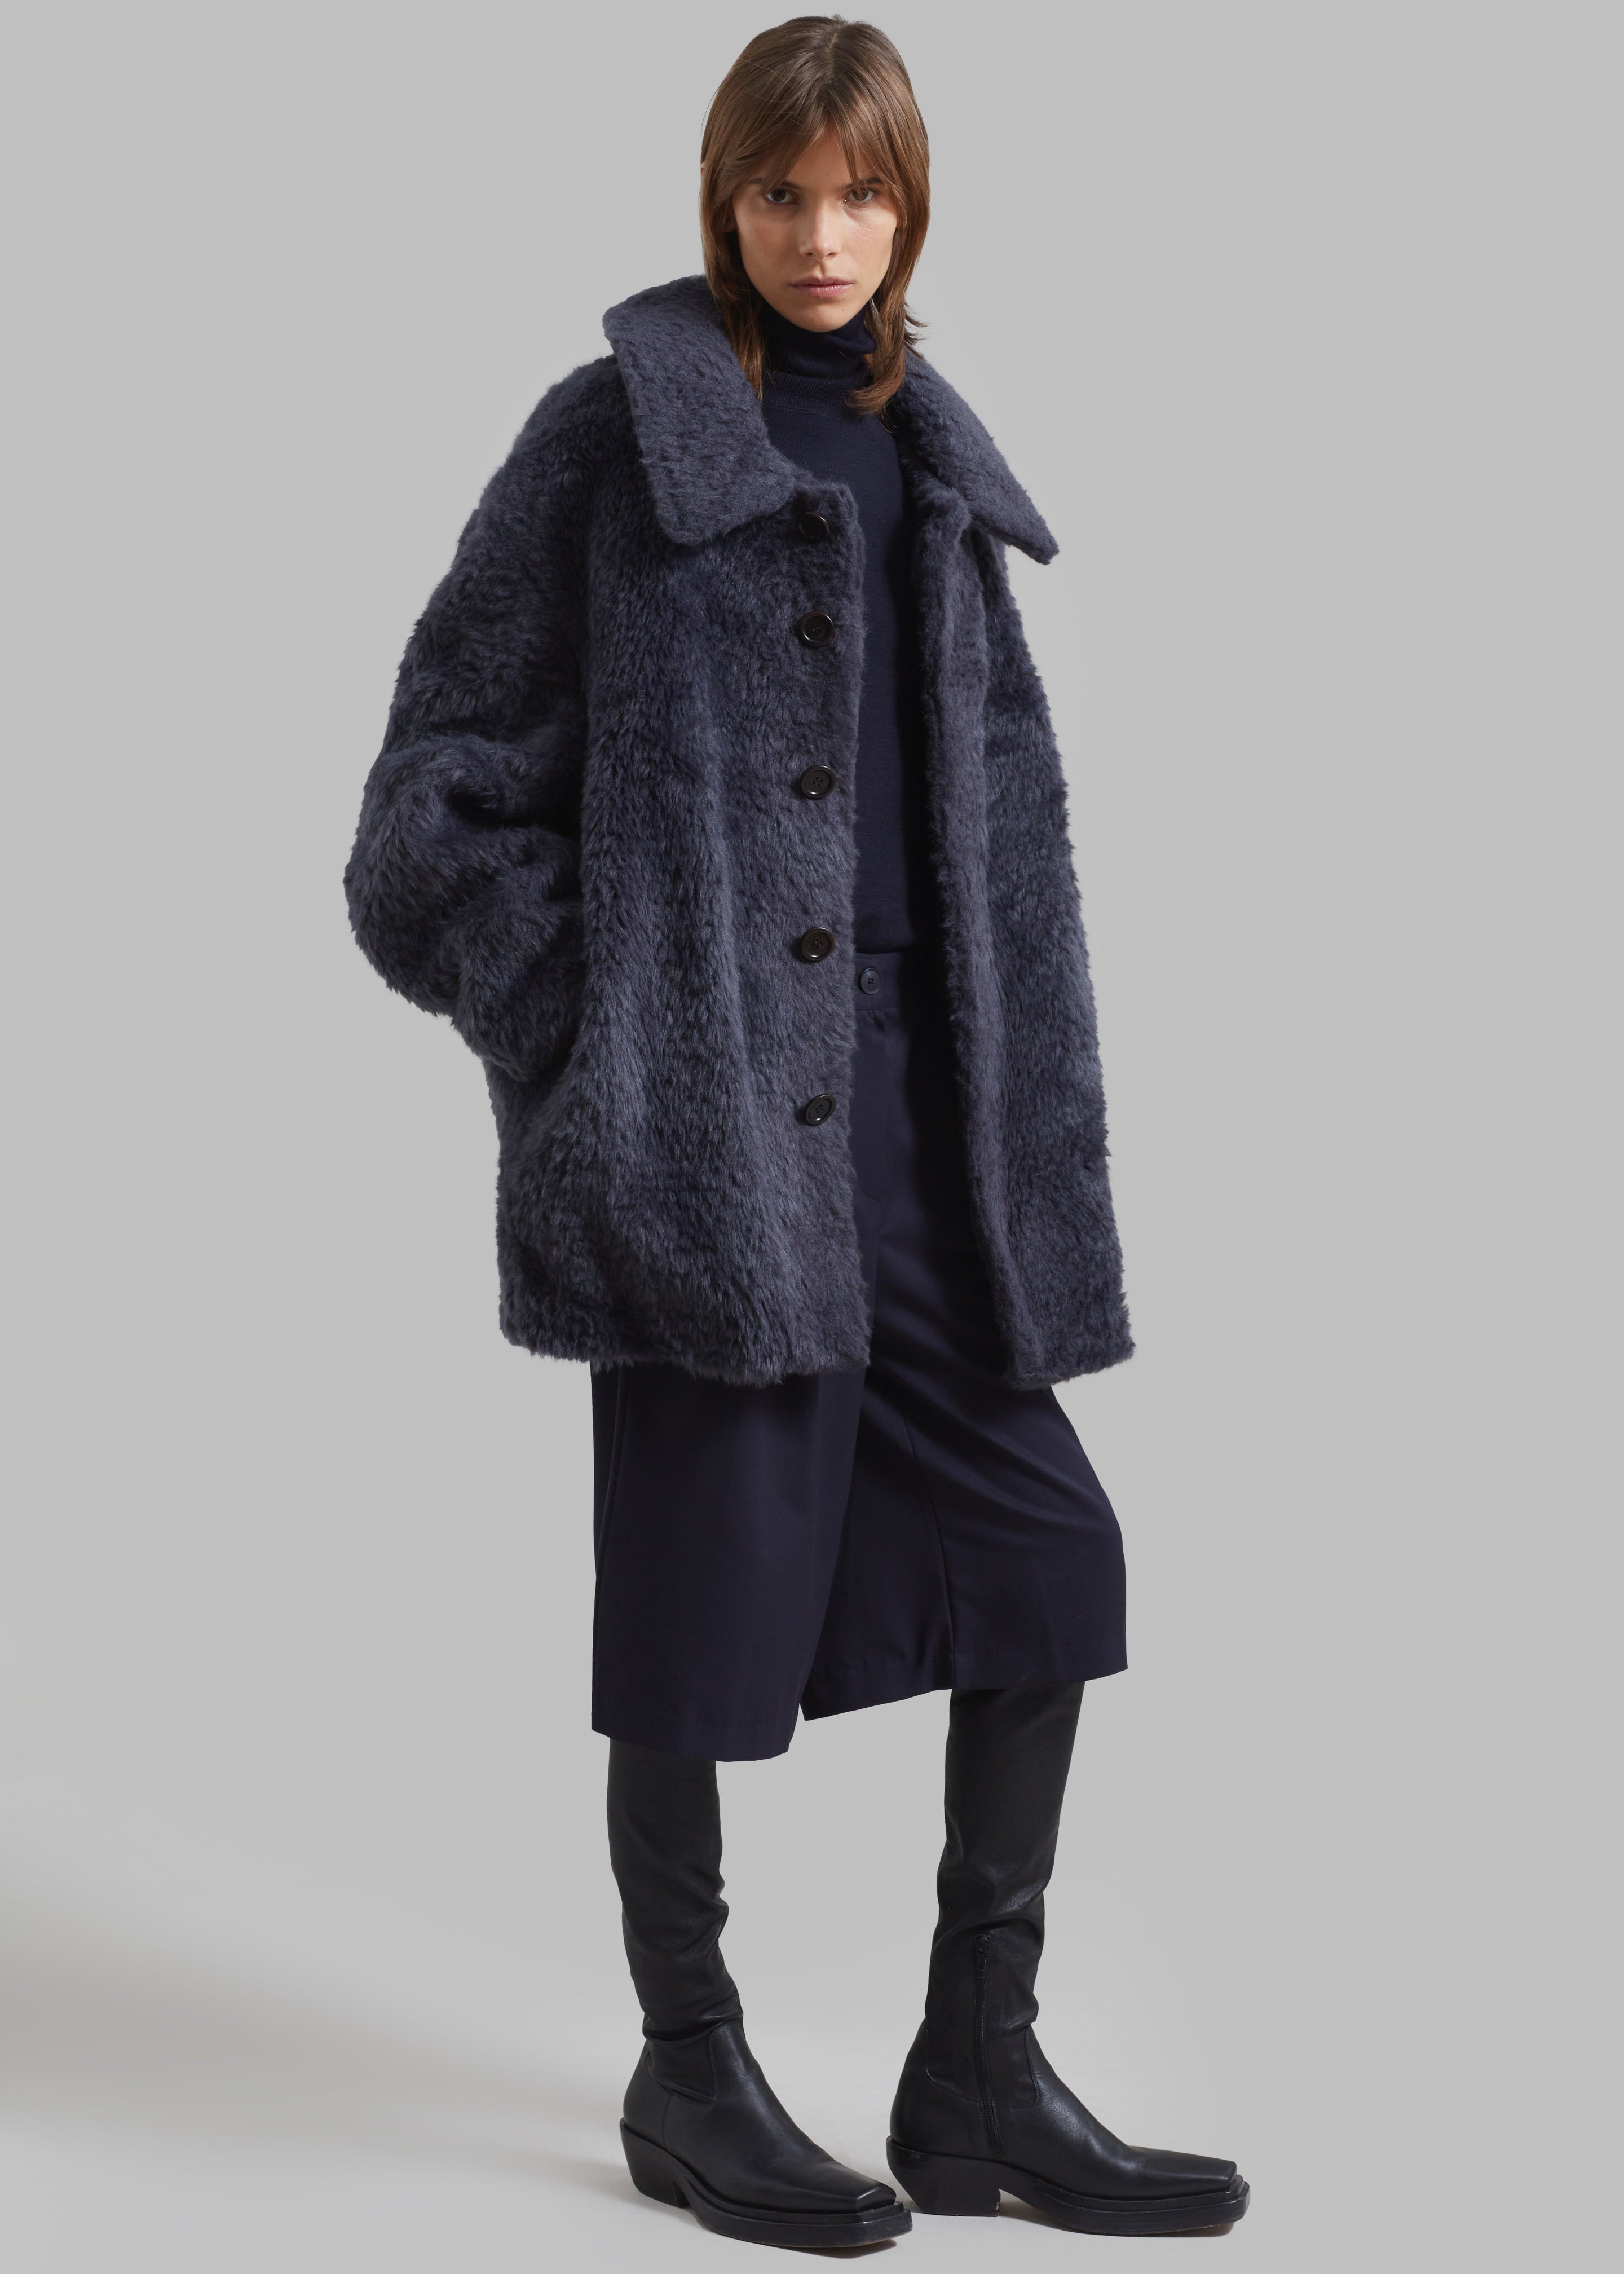 Amomento Fur Mid Coat - Charcoal - 5